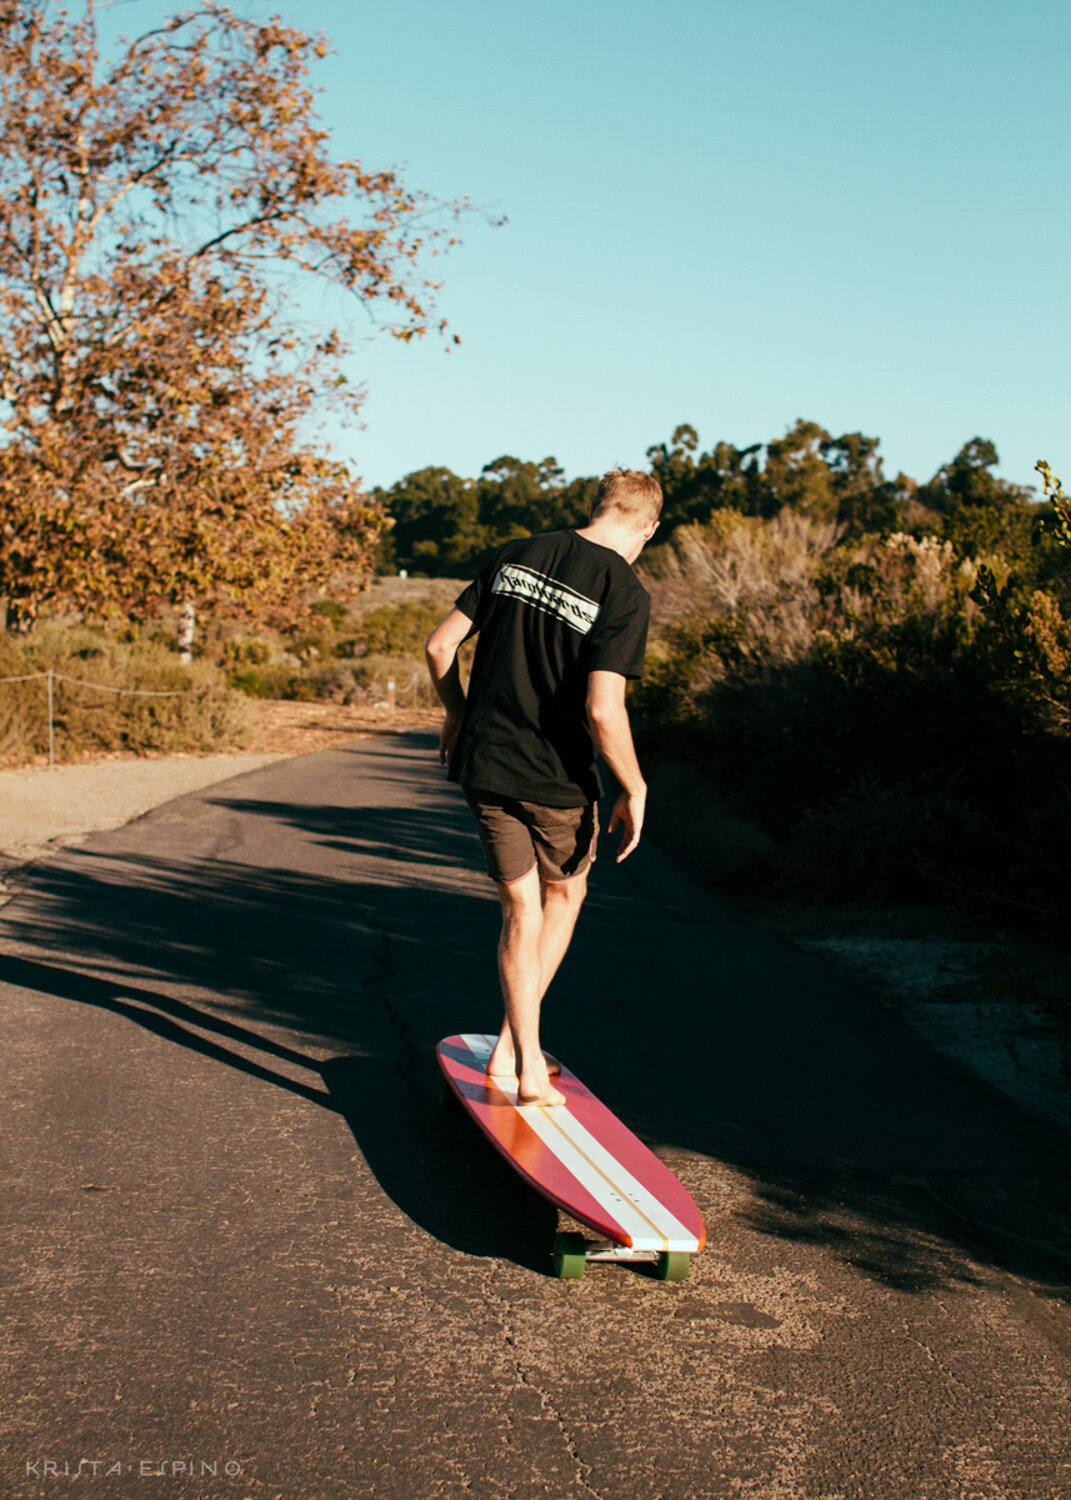 skate skateboard skating hamboard hamboards california surf surfing newport orange county lifestyle ocean beach nature photography photographer krista espino sunrise-20.jpg